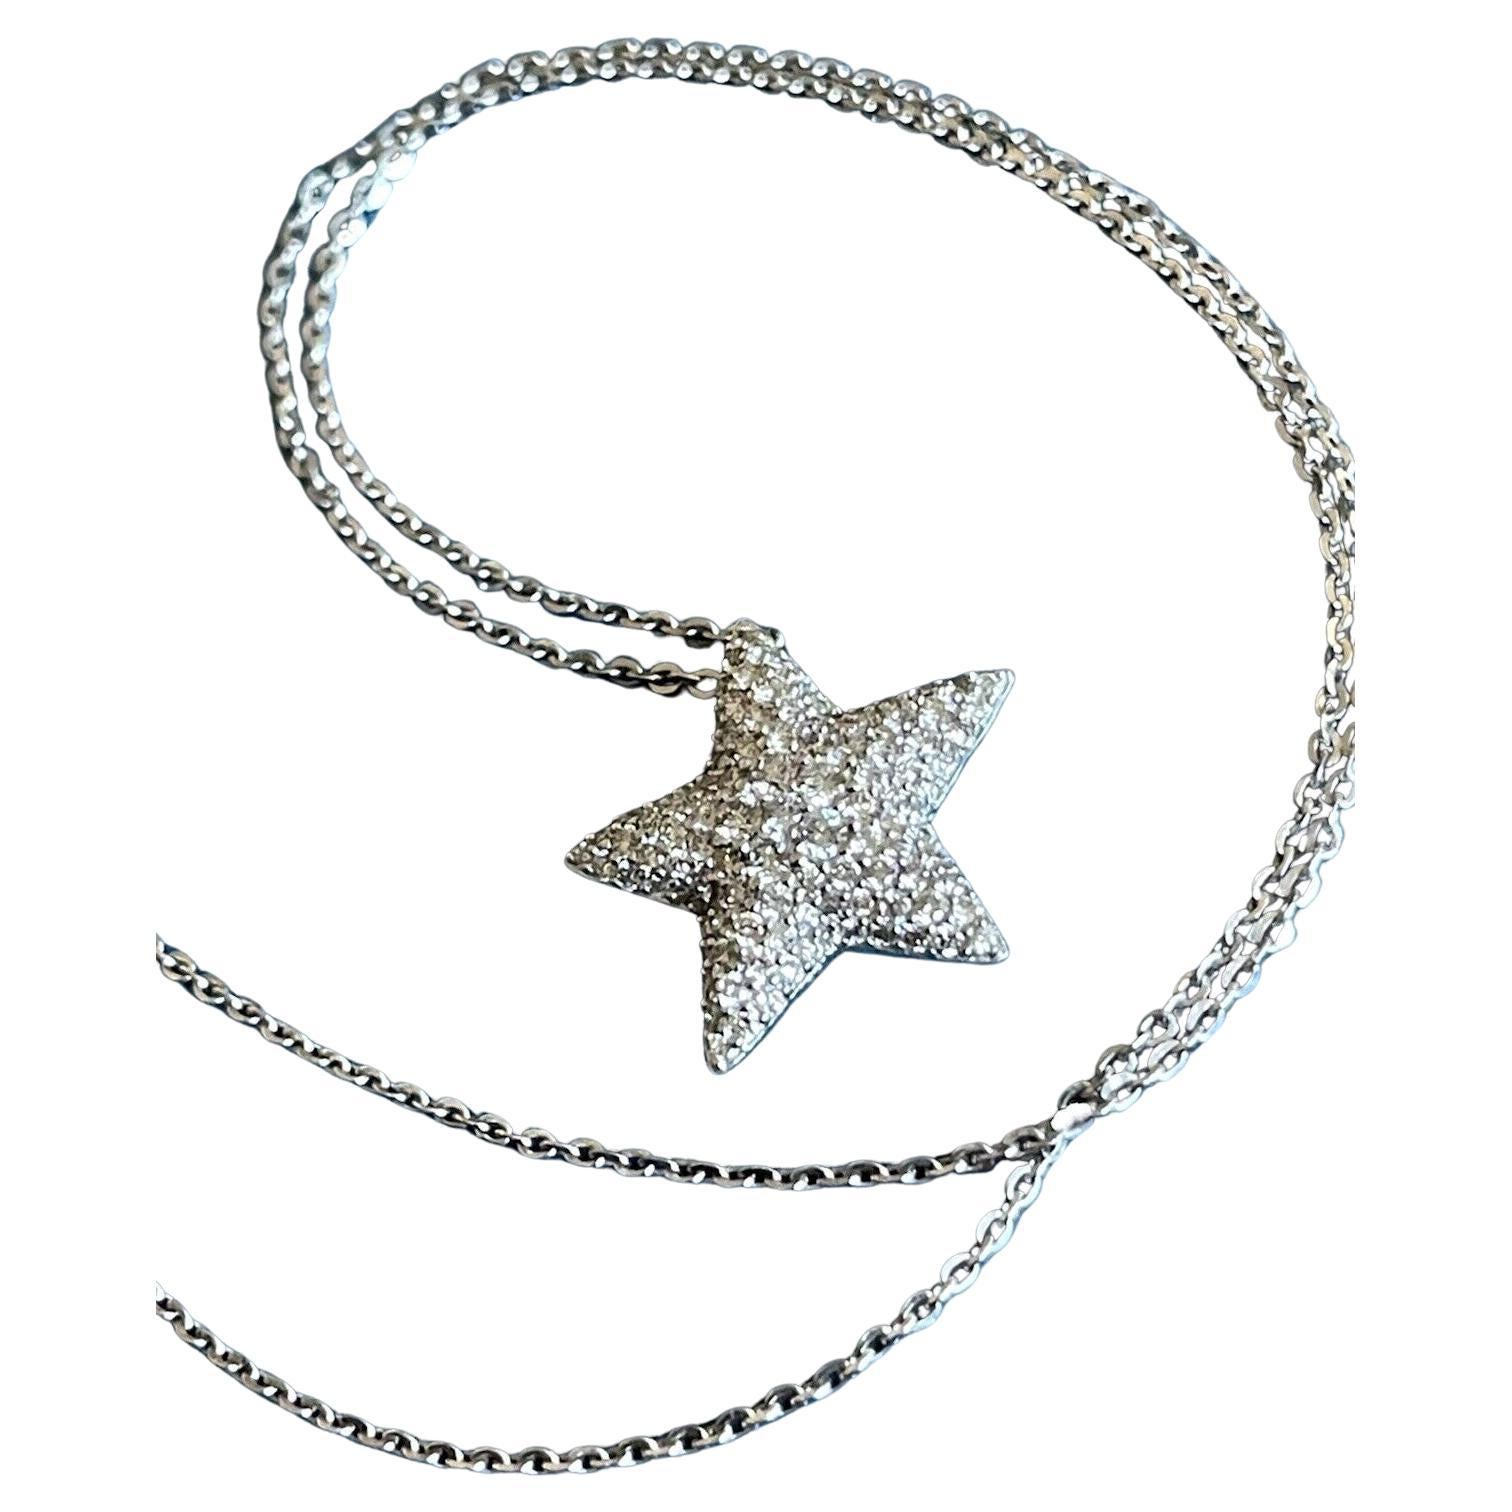 Cervin Blanc 18ct White Gold Diamond Necklace 1ct Star Pendant & Chain One Carat